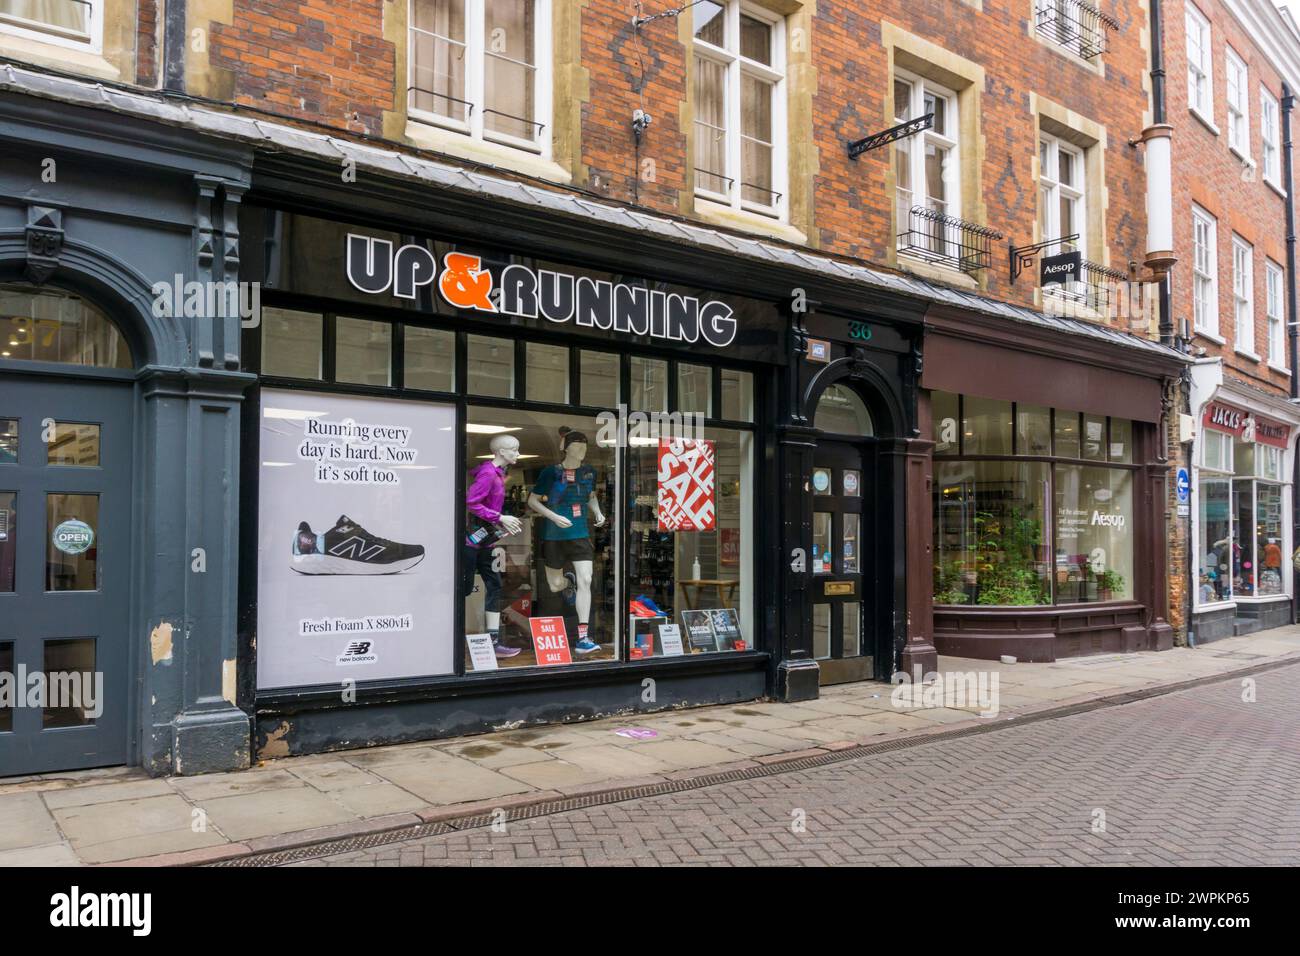 Premises of UP & Running shop in Trinity Street, Cambridge. Stock Photo